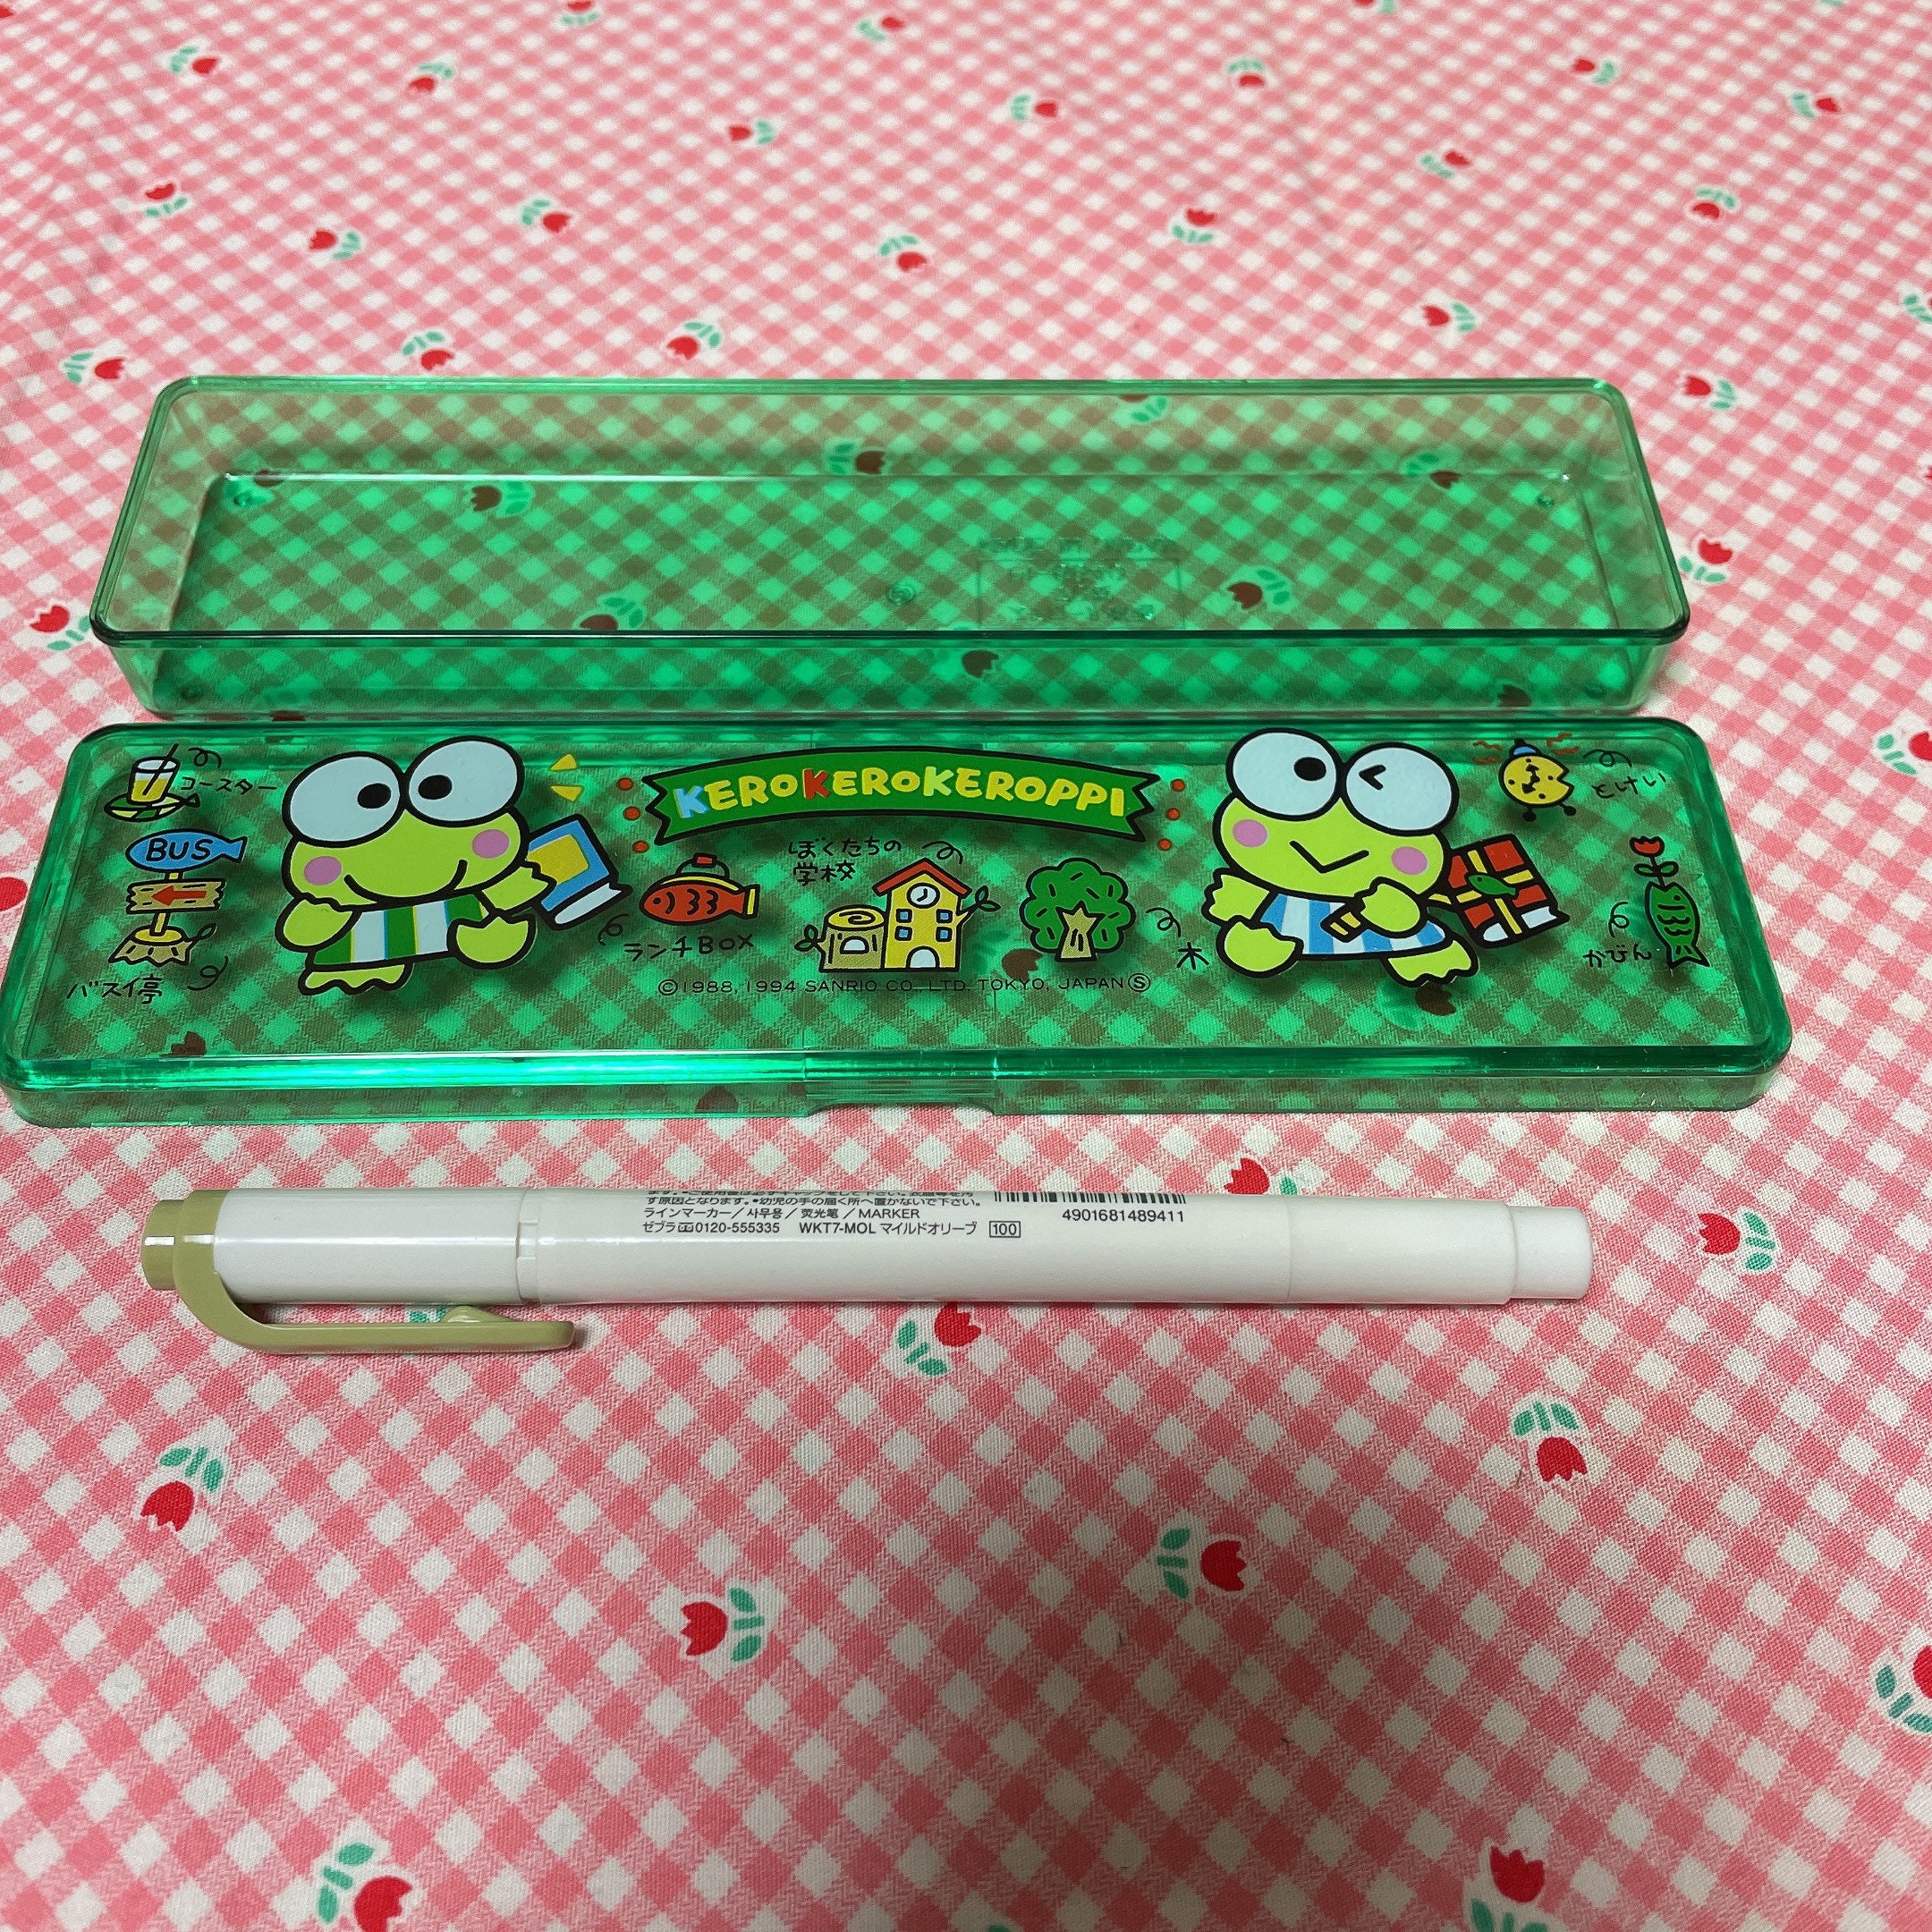 Sanrio Pencil Cases that all the cool kids had : r/nostalgia